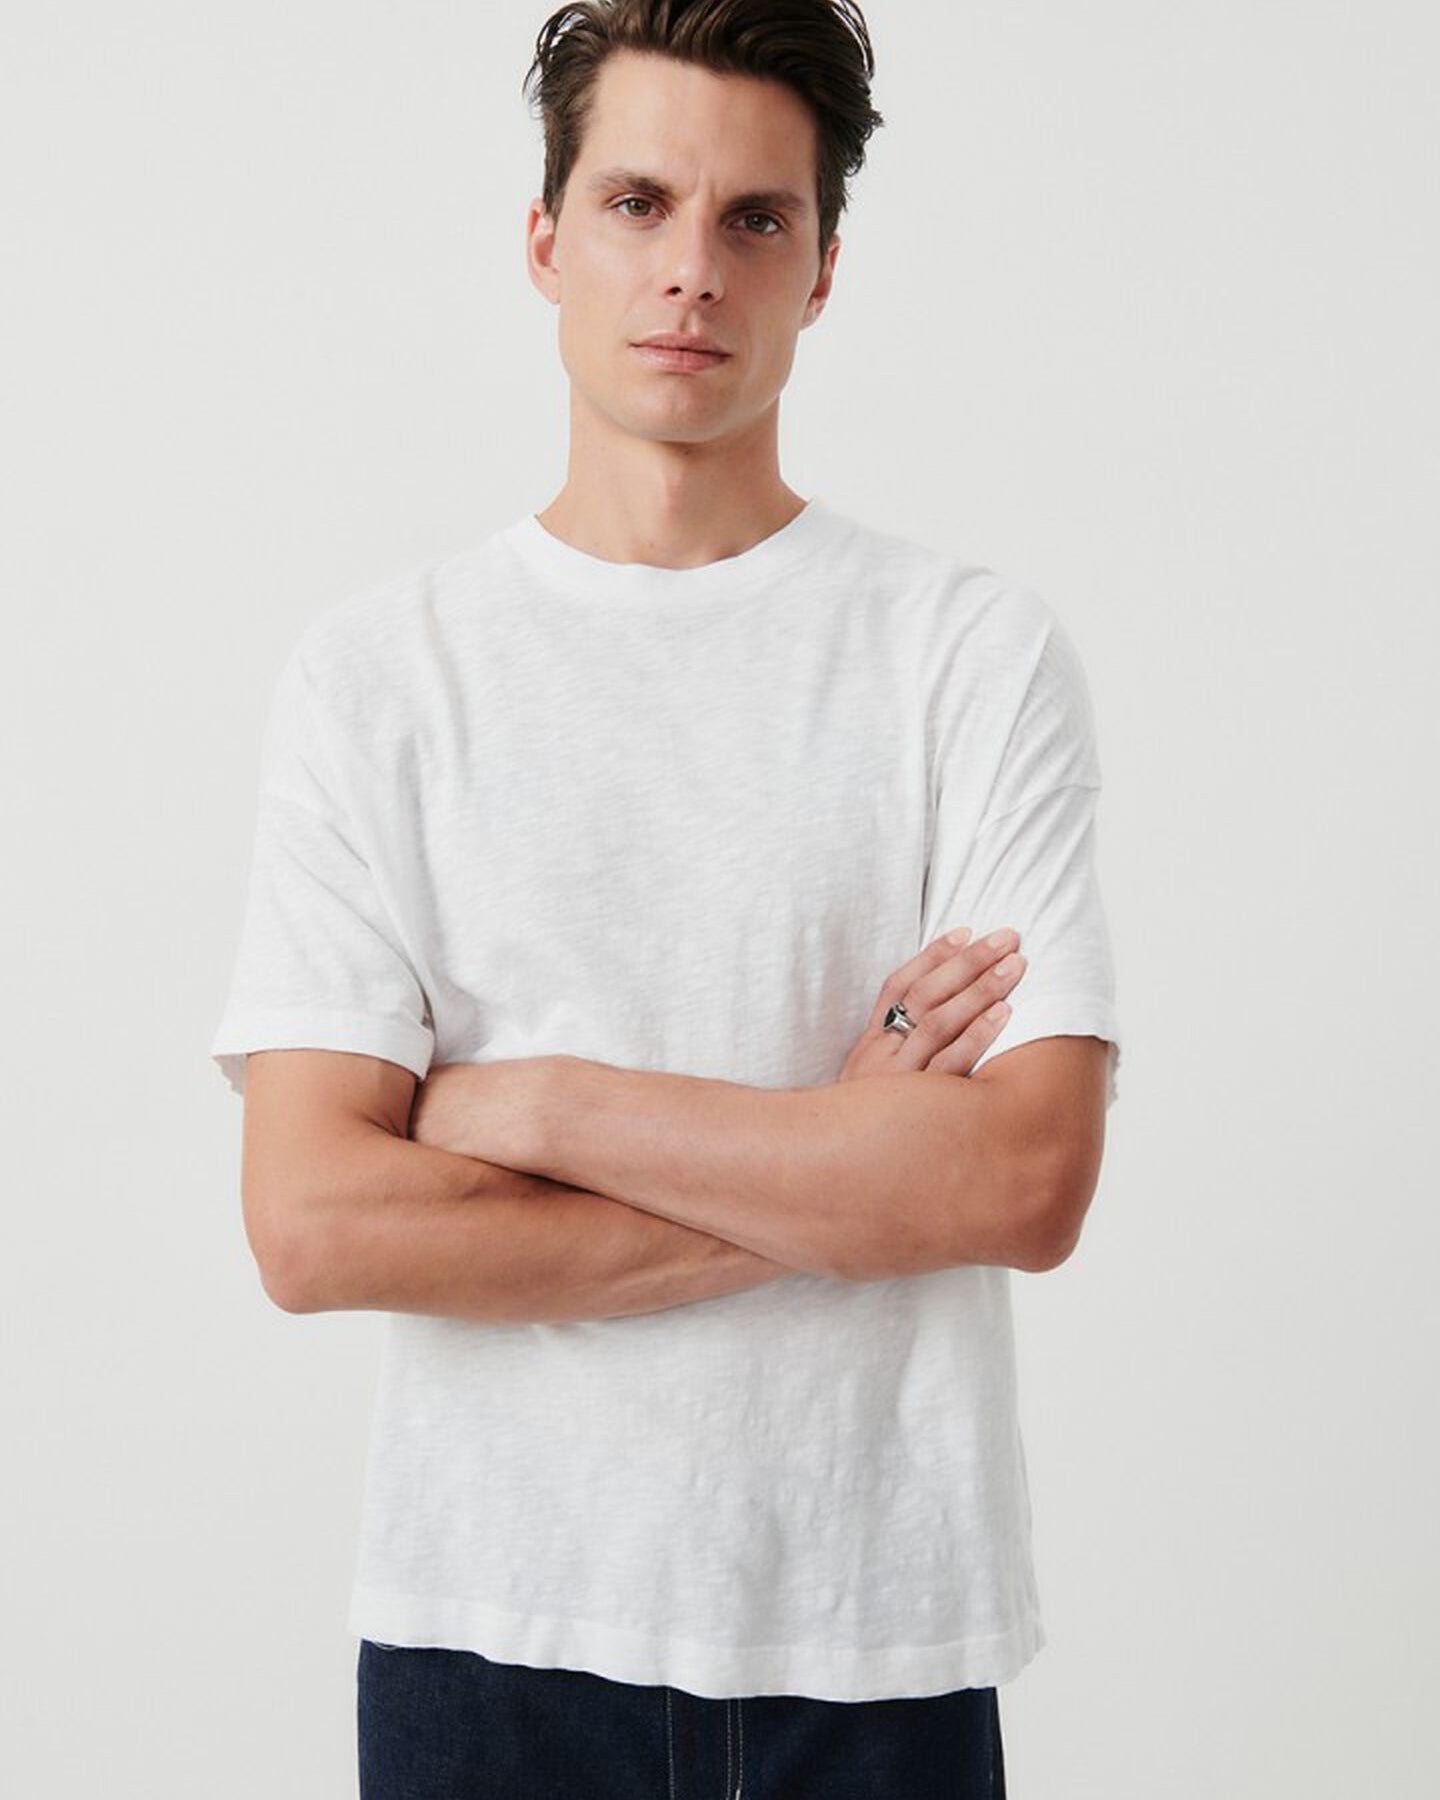 T-shirt Bysapick - Blanc